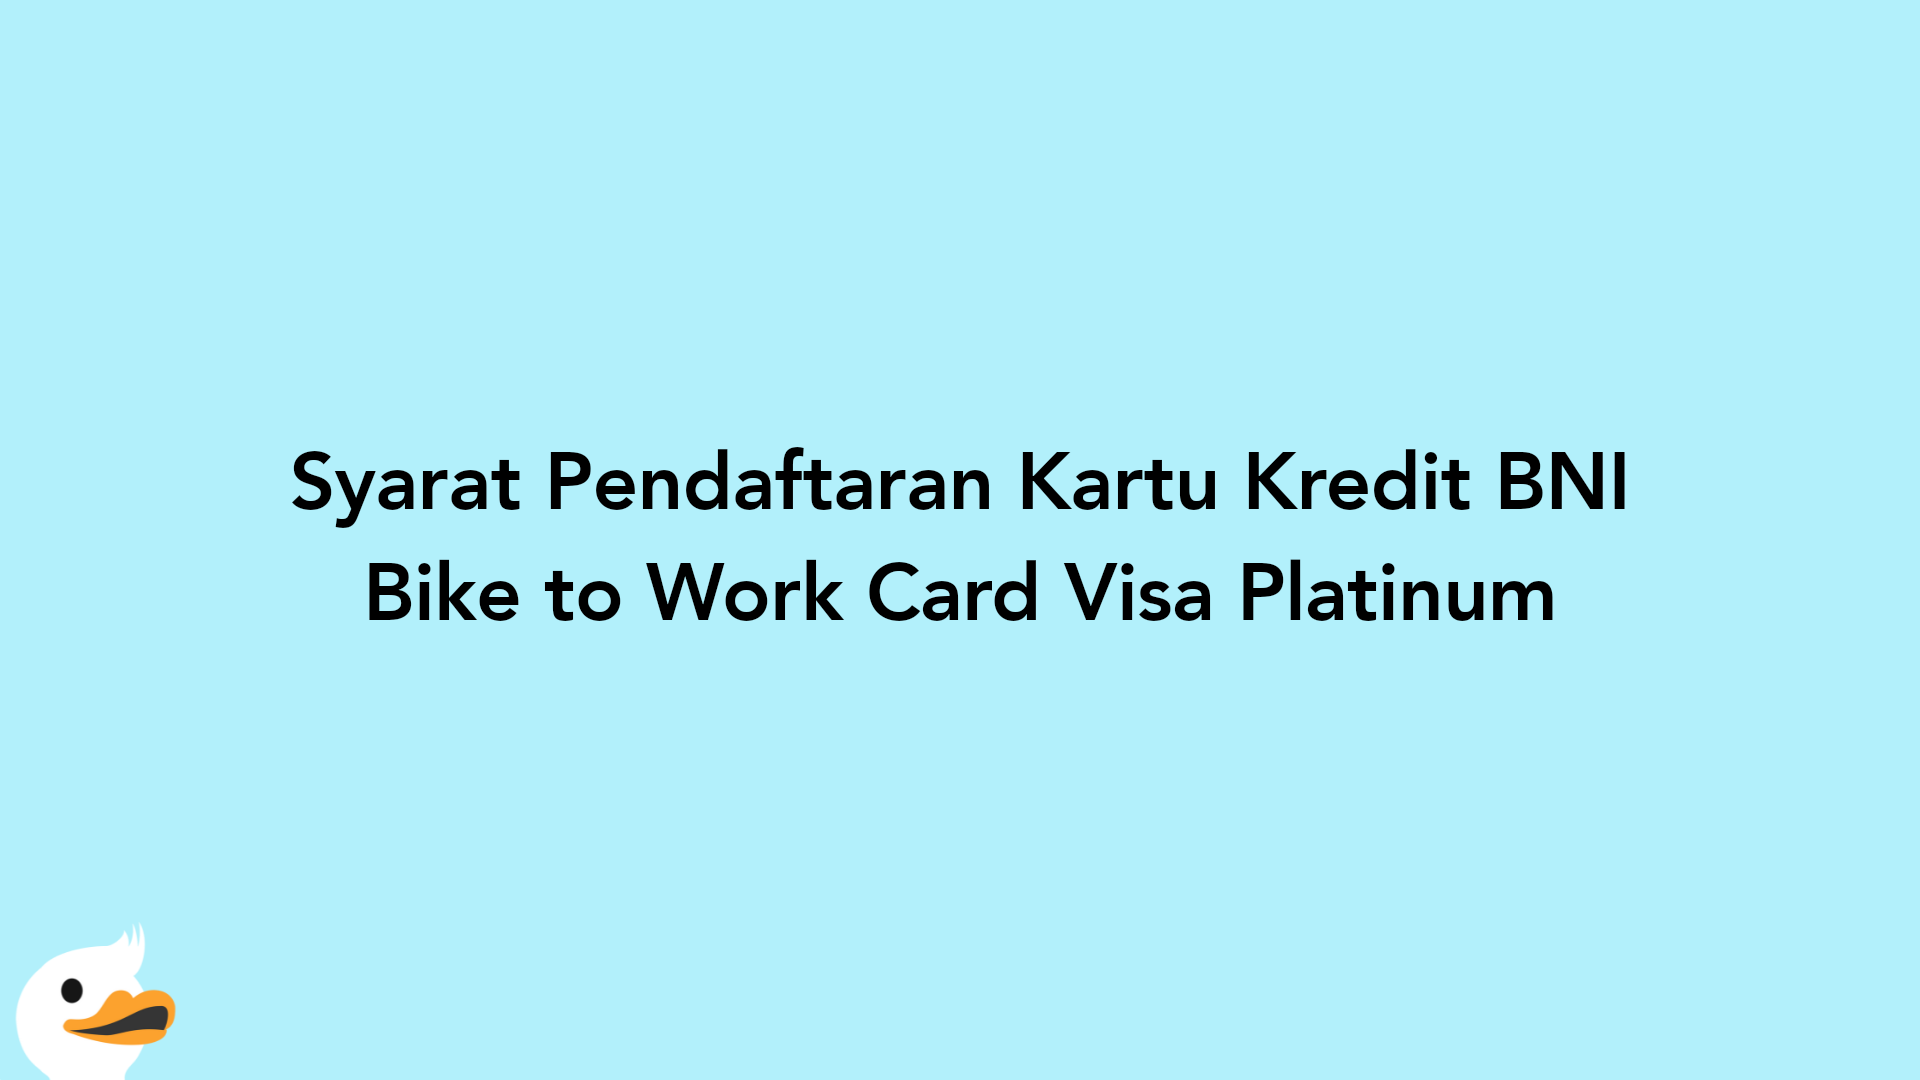 Syarat Pendaftaran Kartu Kredit BNI Bike to Work Card Visa Platinum